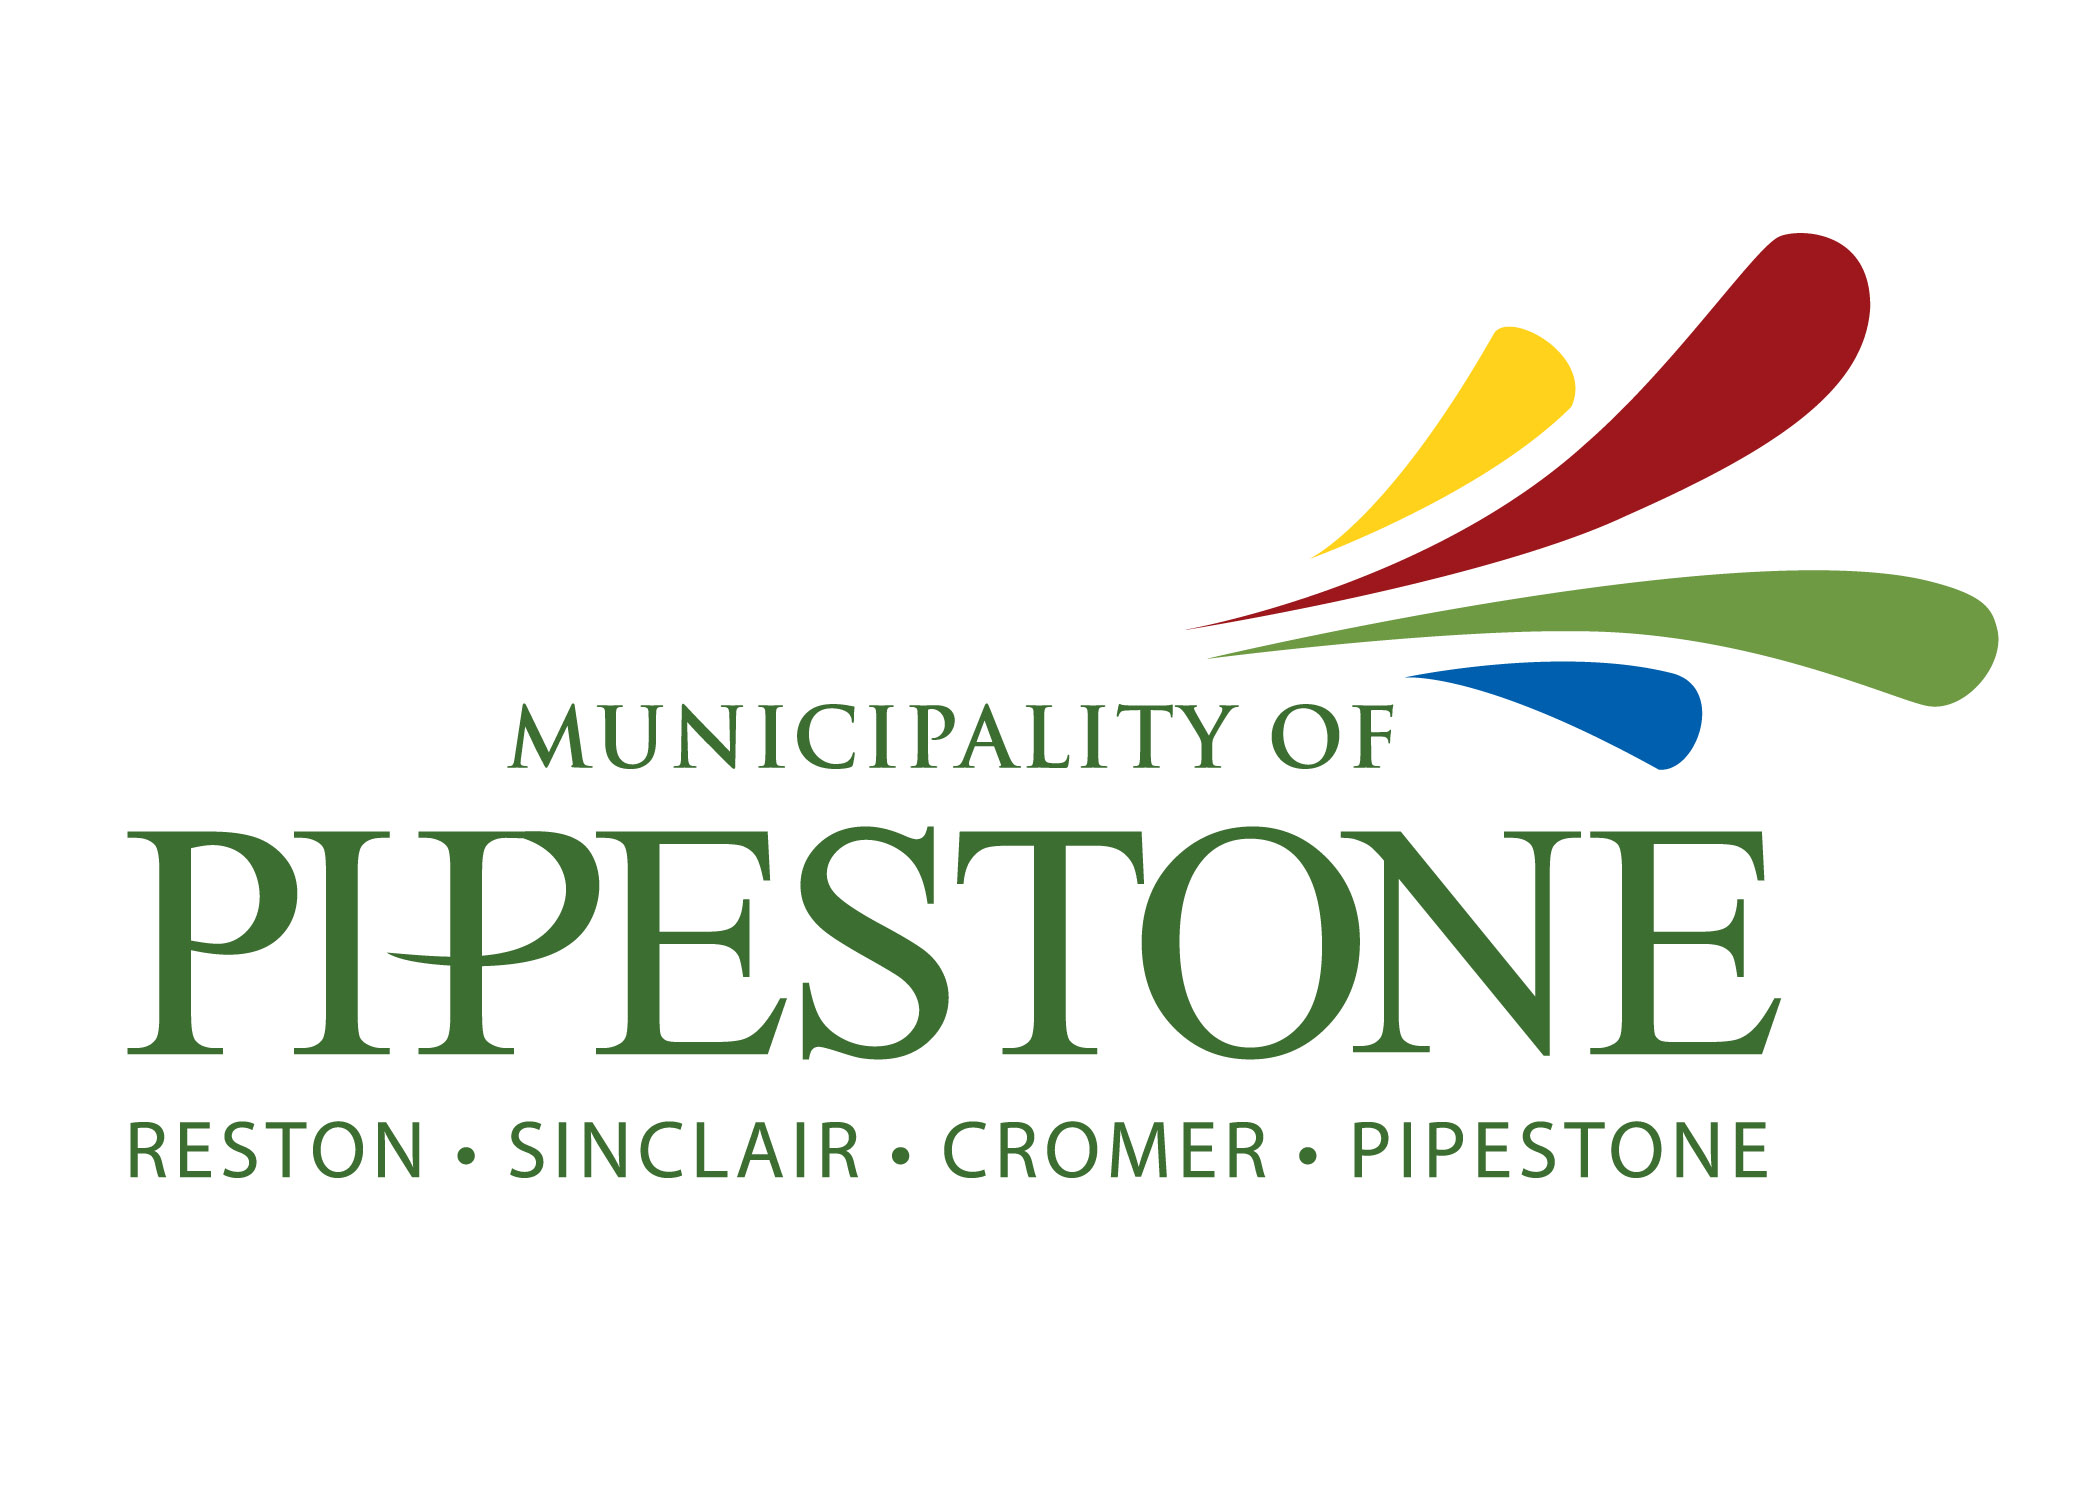 Organization logo of Rural Municipality of Pipestone